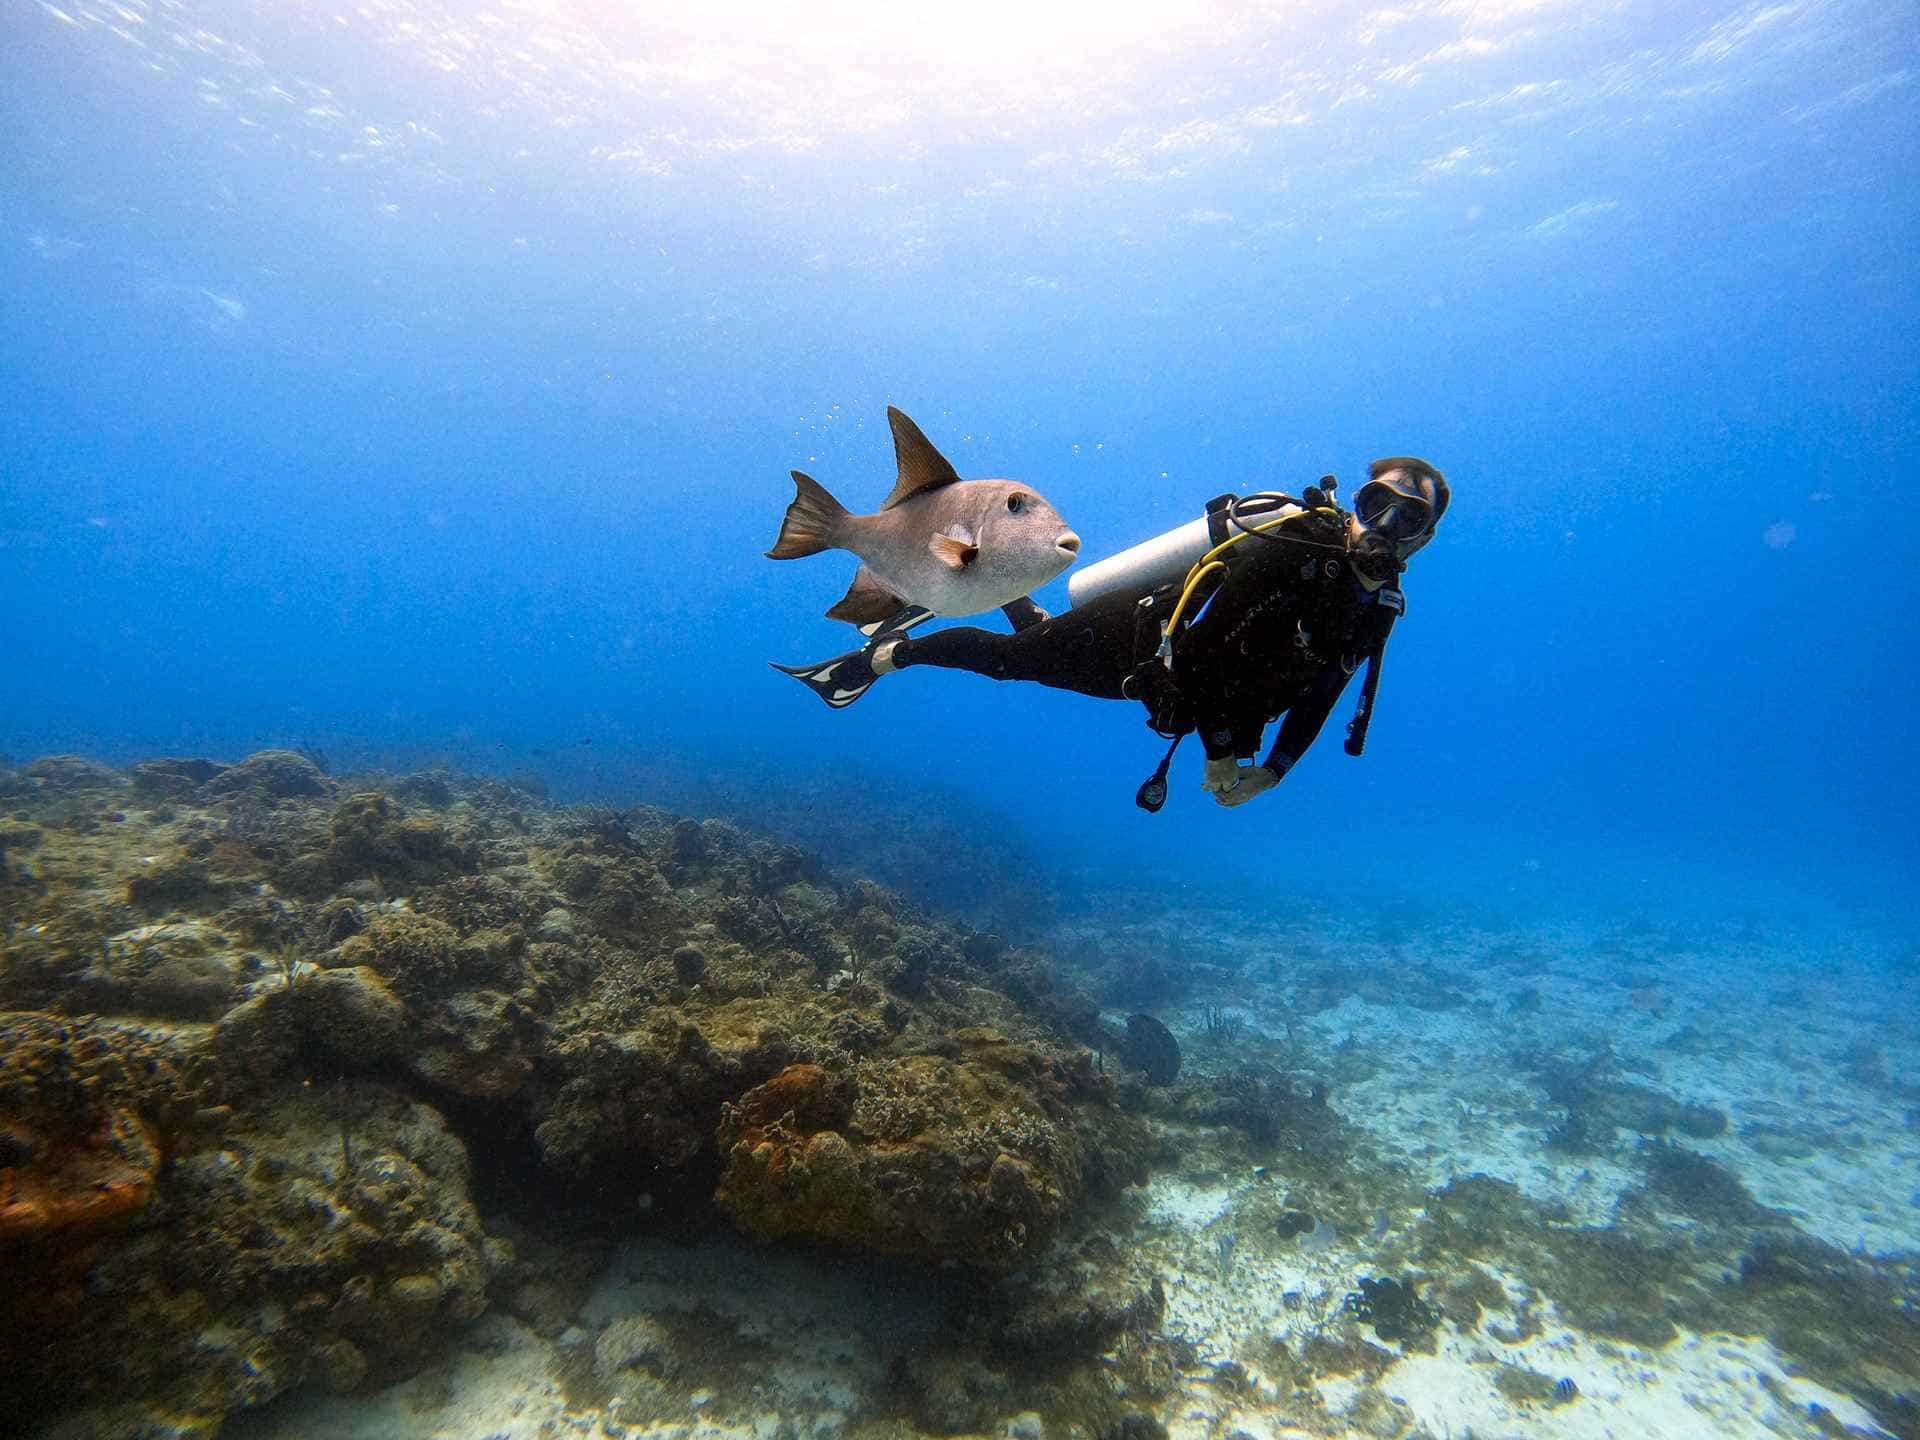 Scuba diver with fish underwater